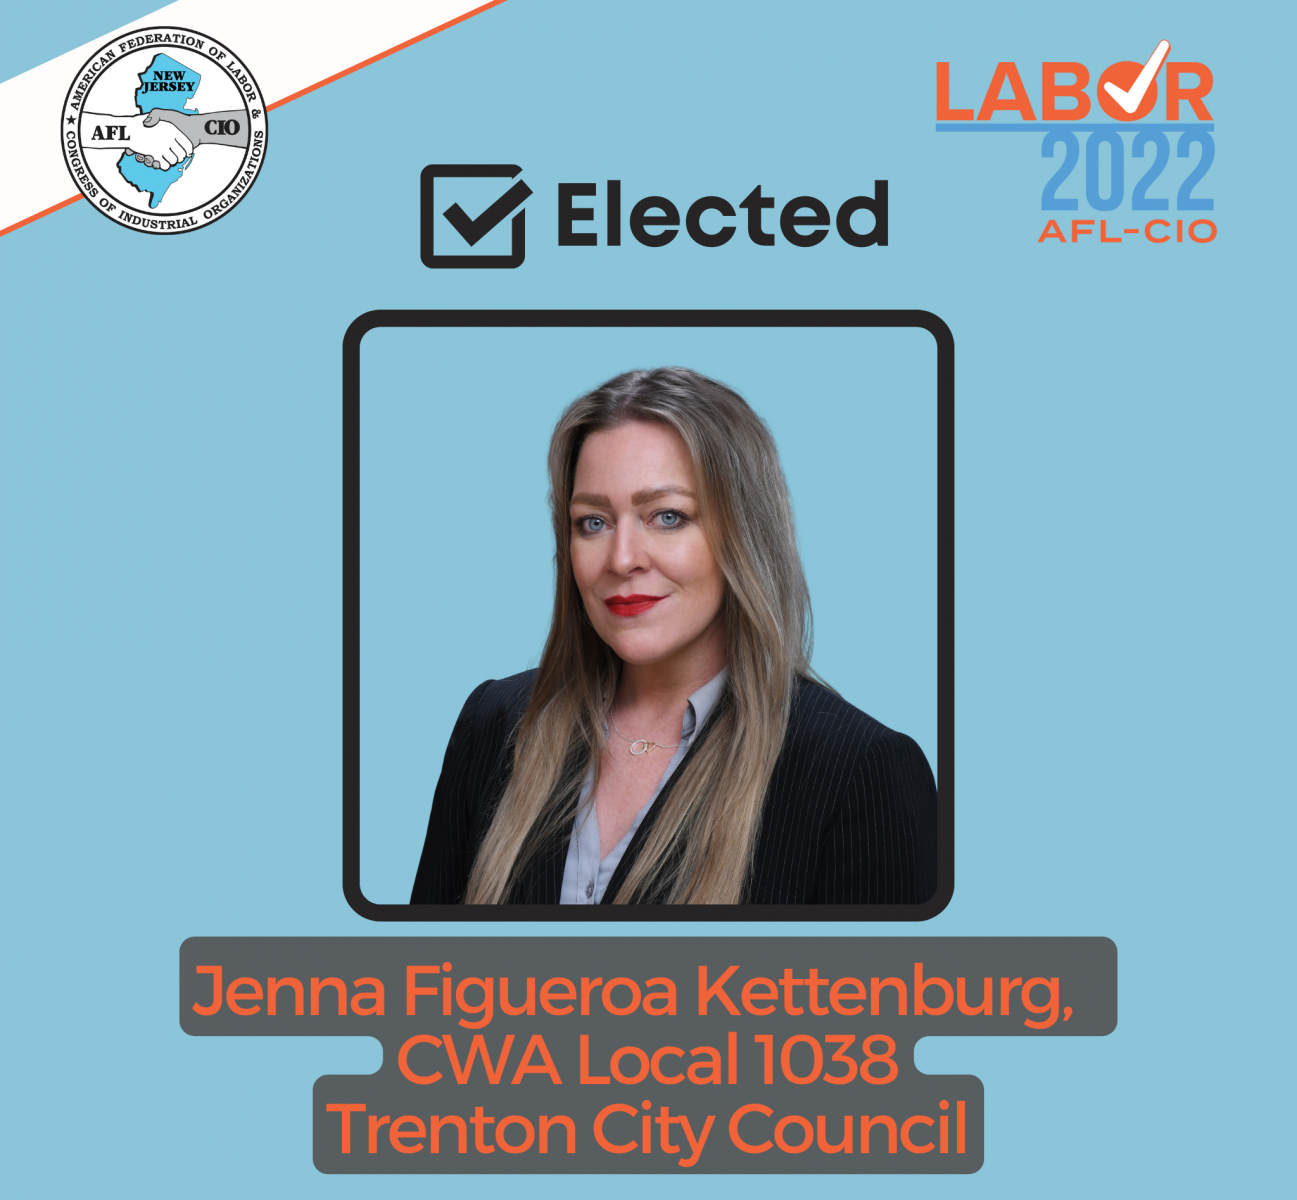 Congratulations Jenna Figueroa Kettenburg!